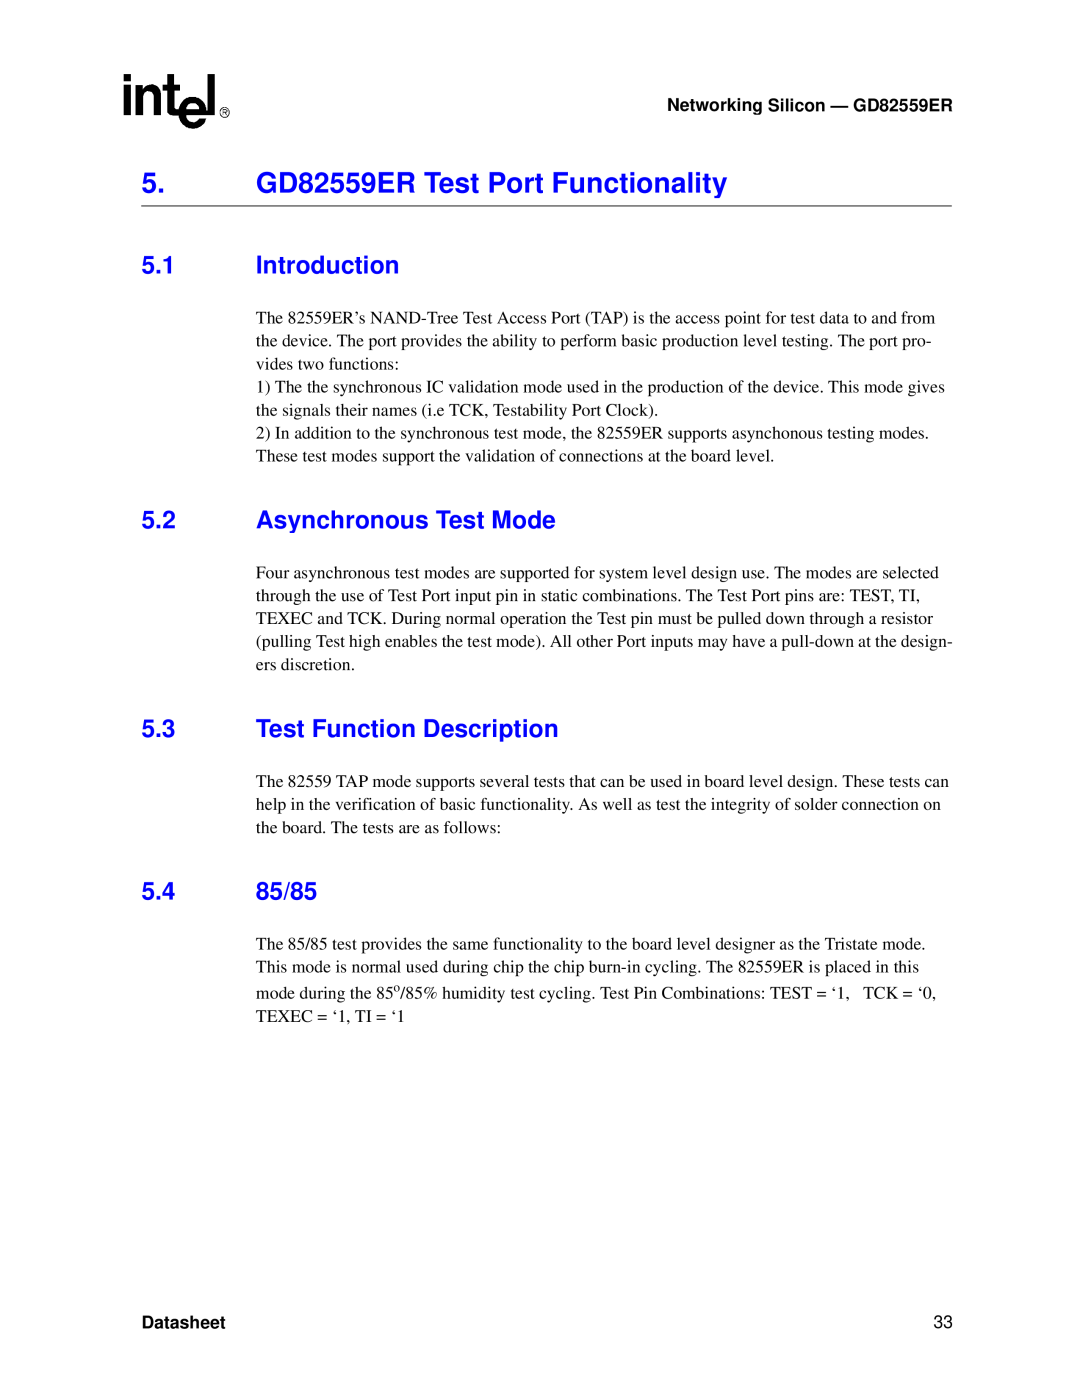 Intel 5. GD82559ER Test Port Functionality, Introduction, Asynchronous Test Mode, Test Function Description, 5.4 85/85 